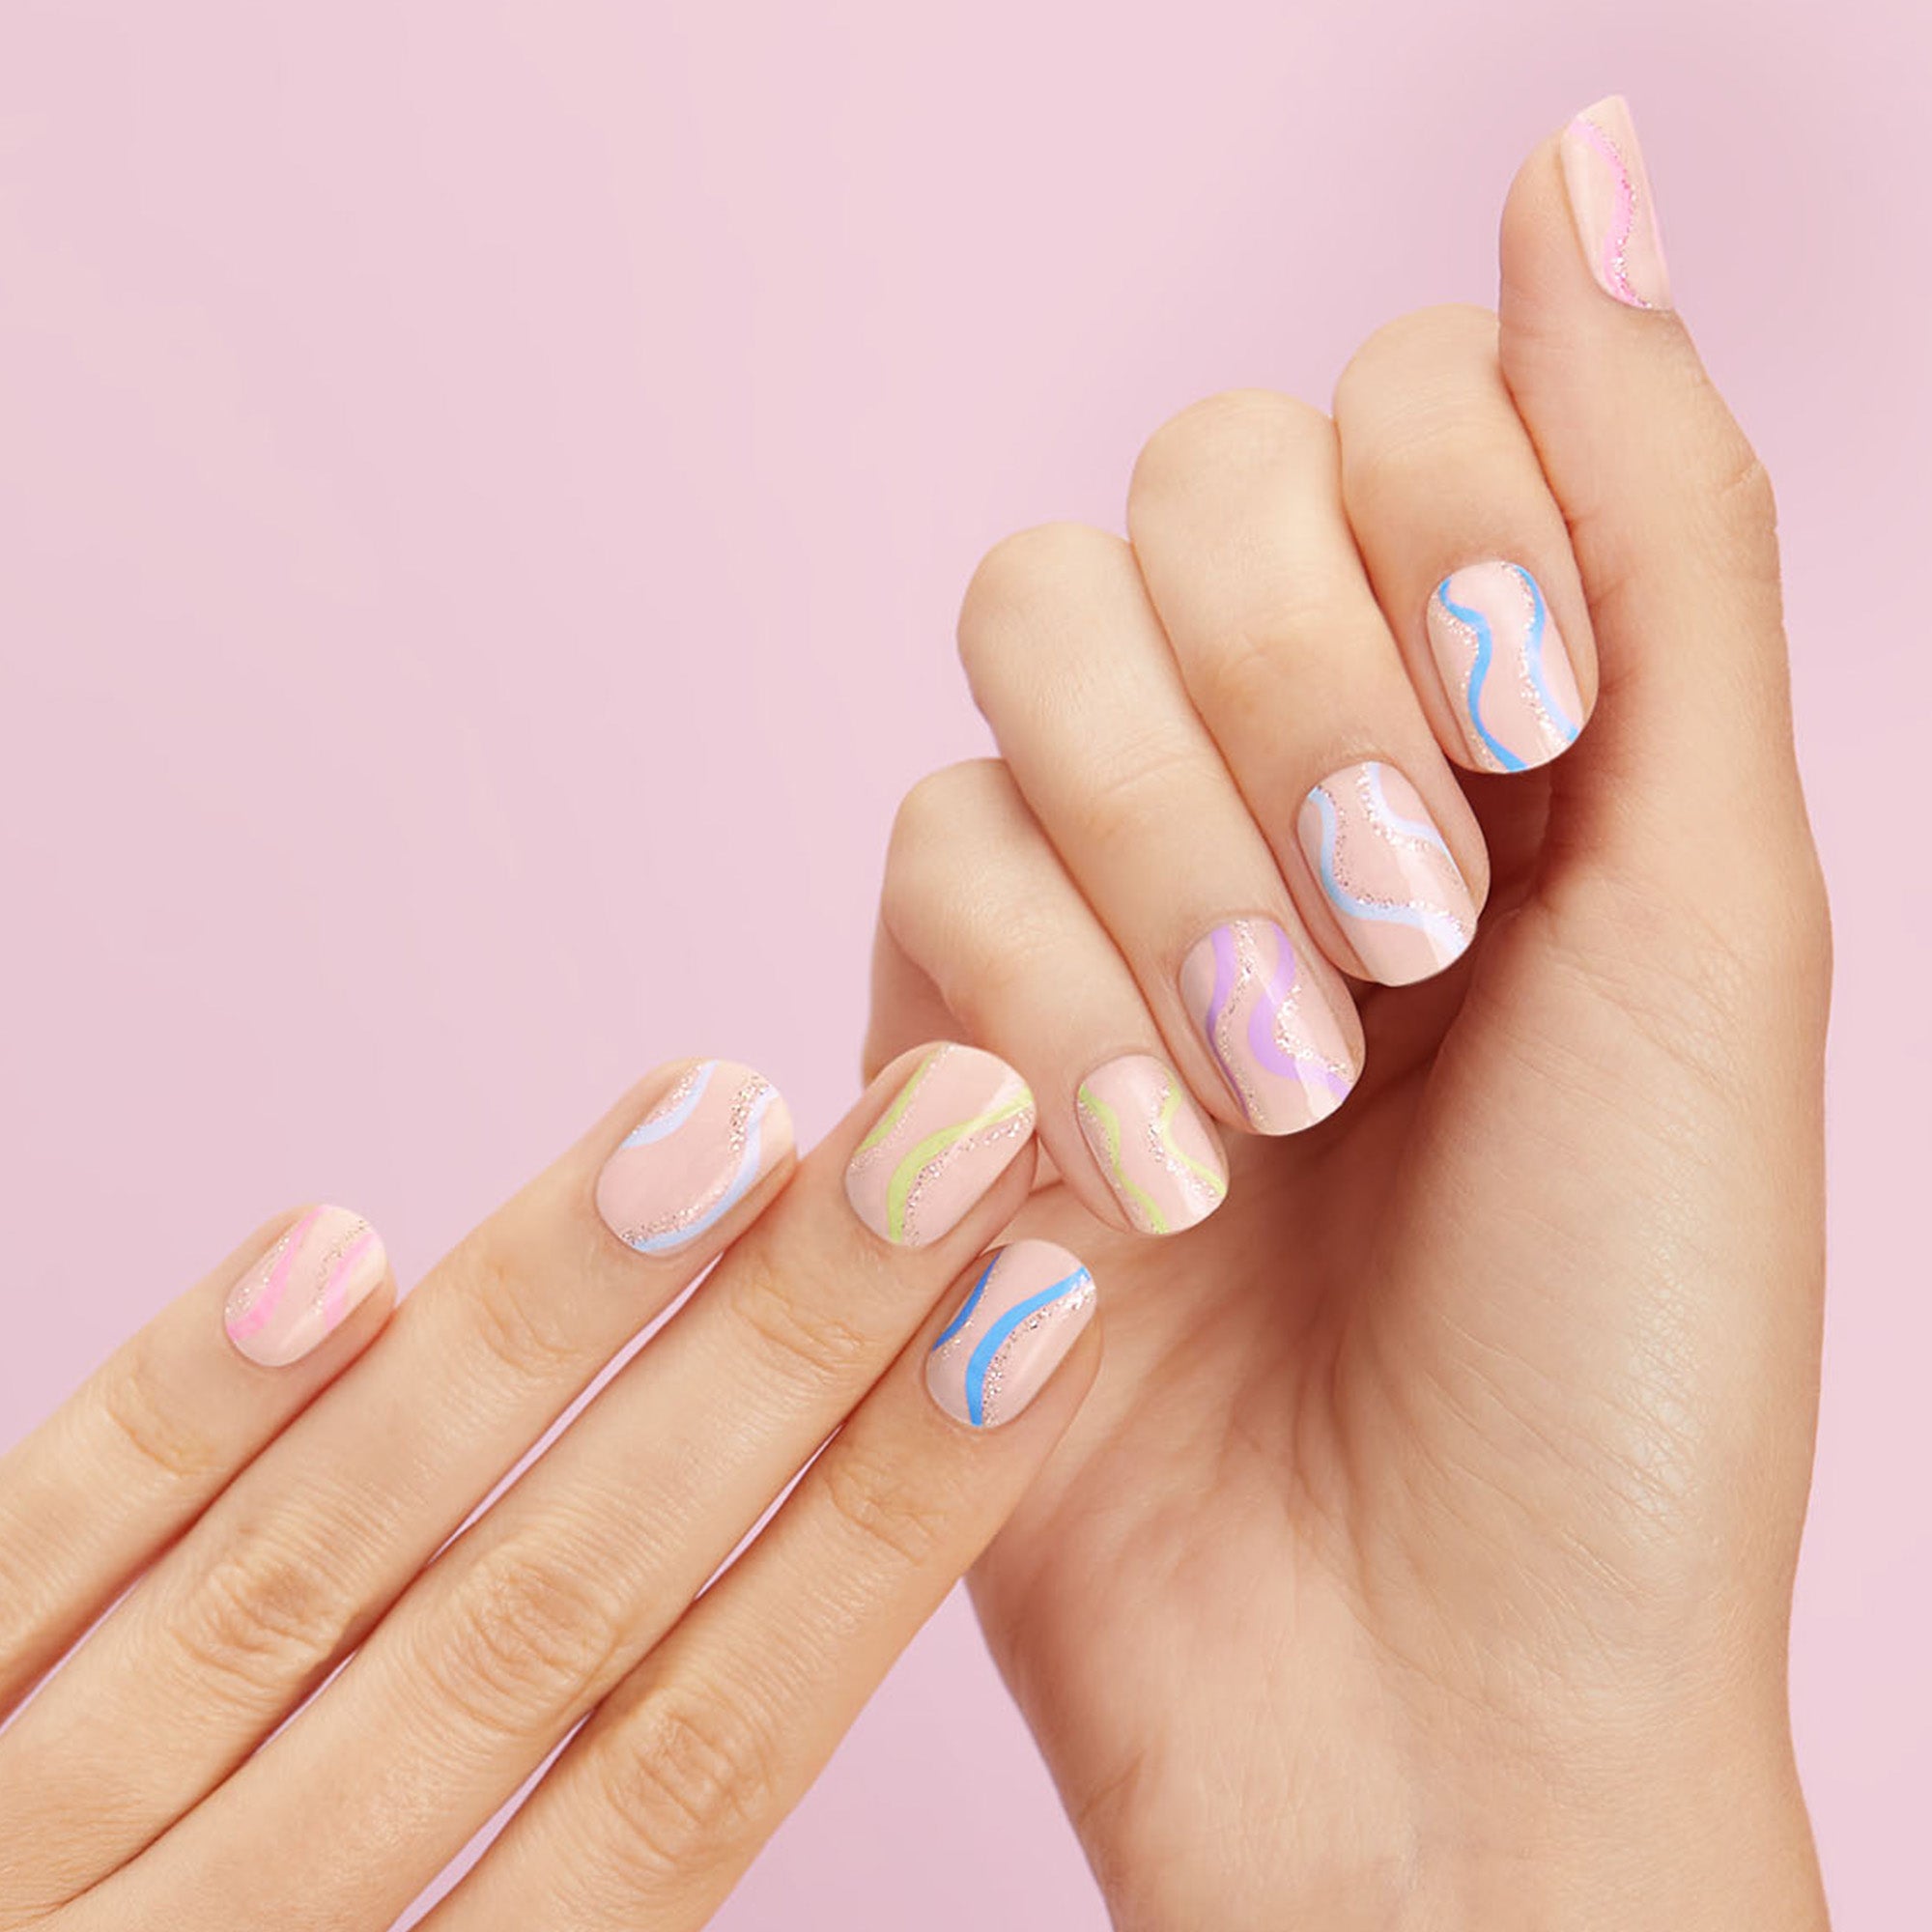 Light pink#gold tips#spring nails#nails art#pretty nails